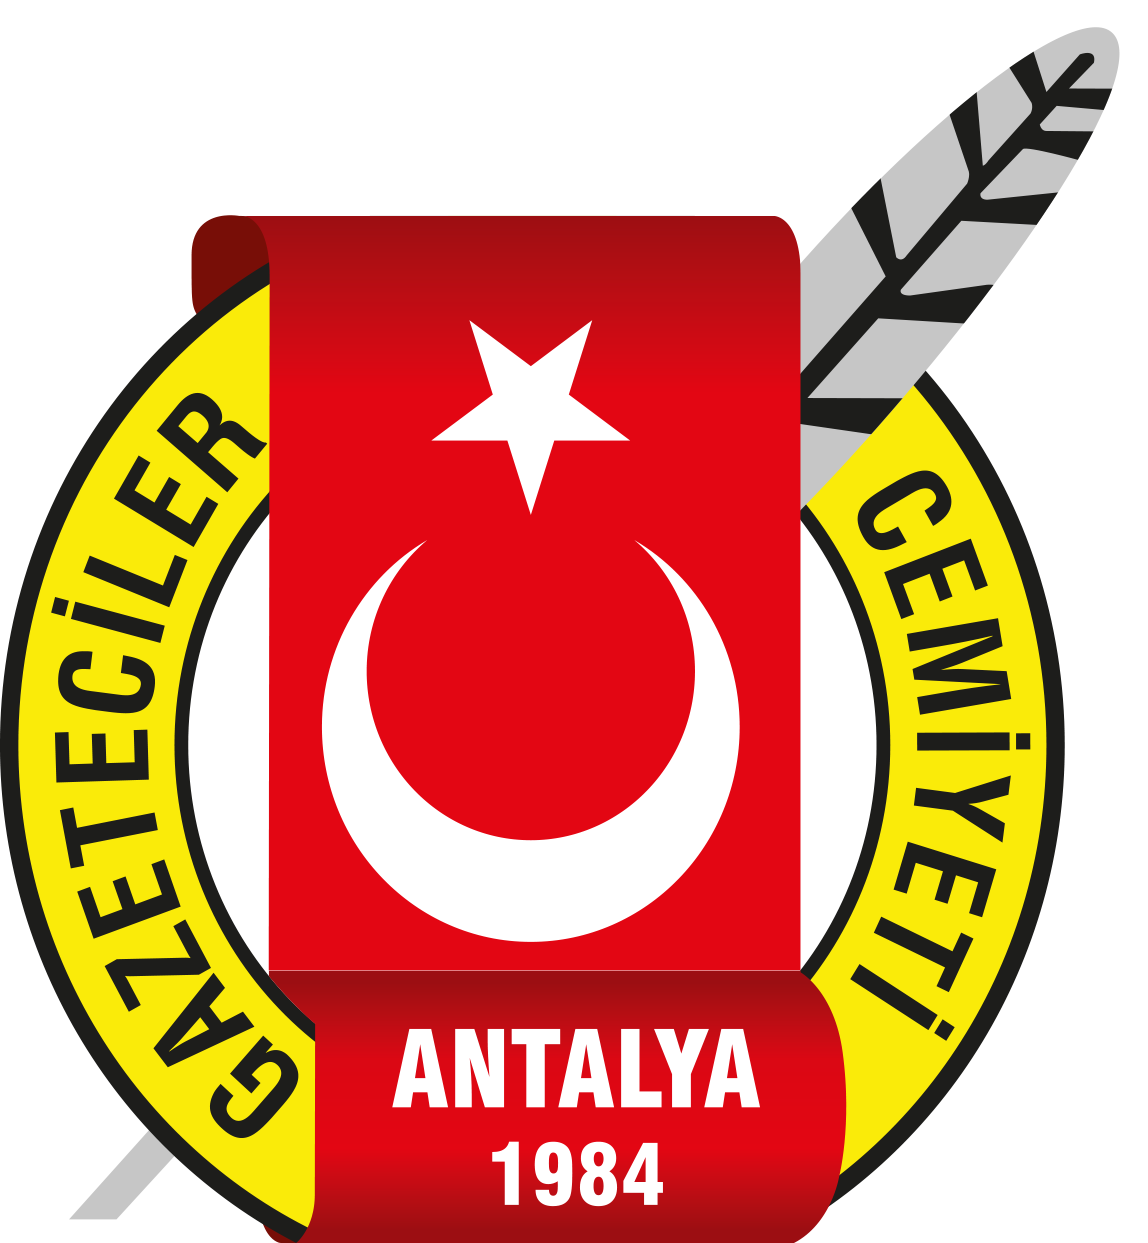 Antalya Gazeteciler Cemiyeti